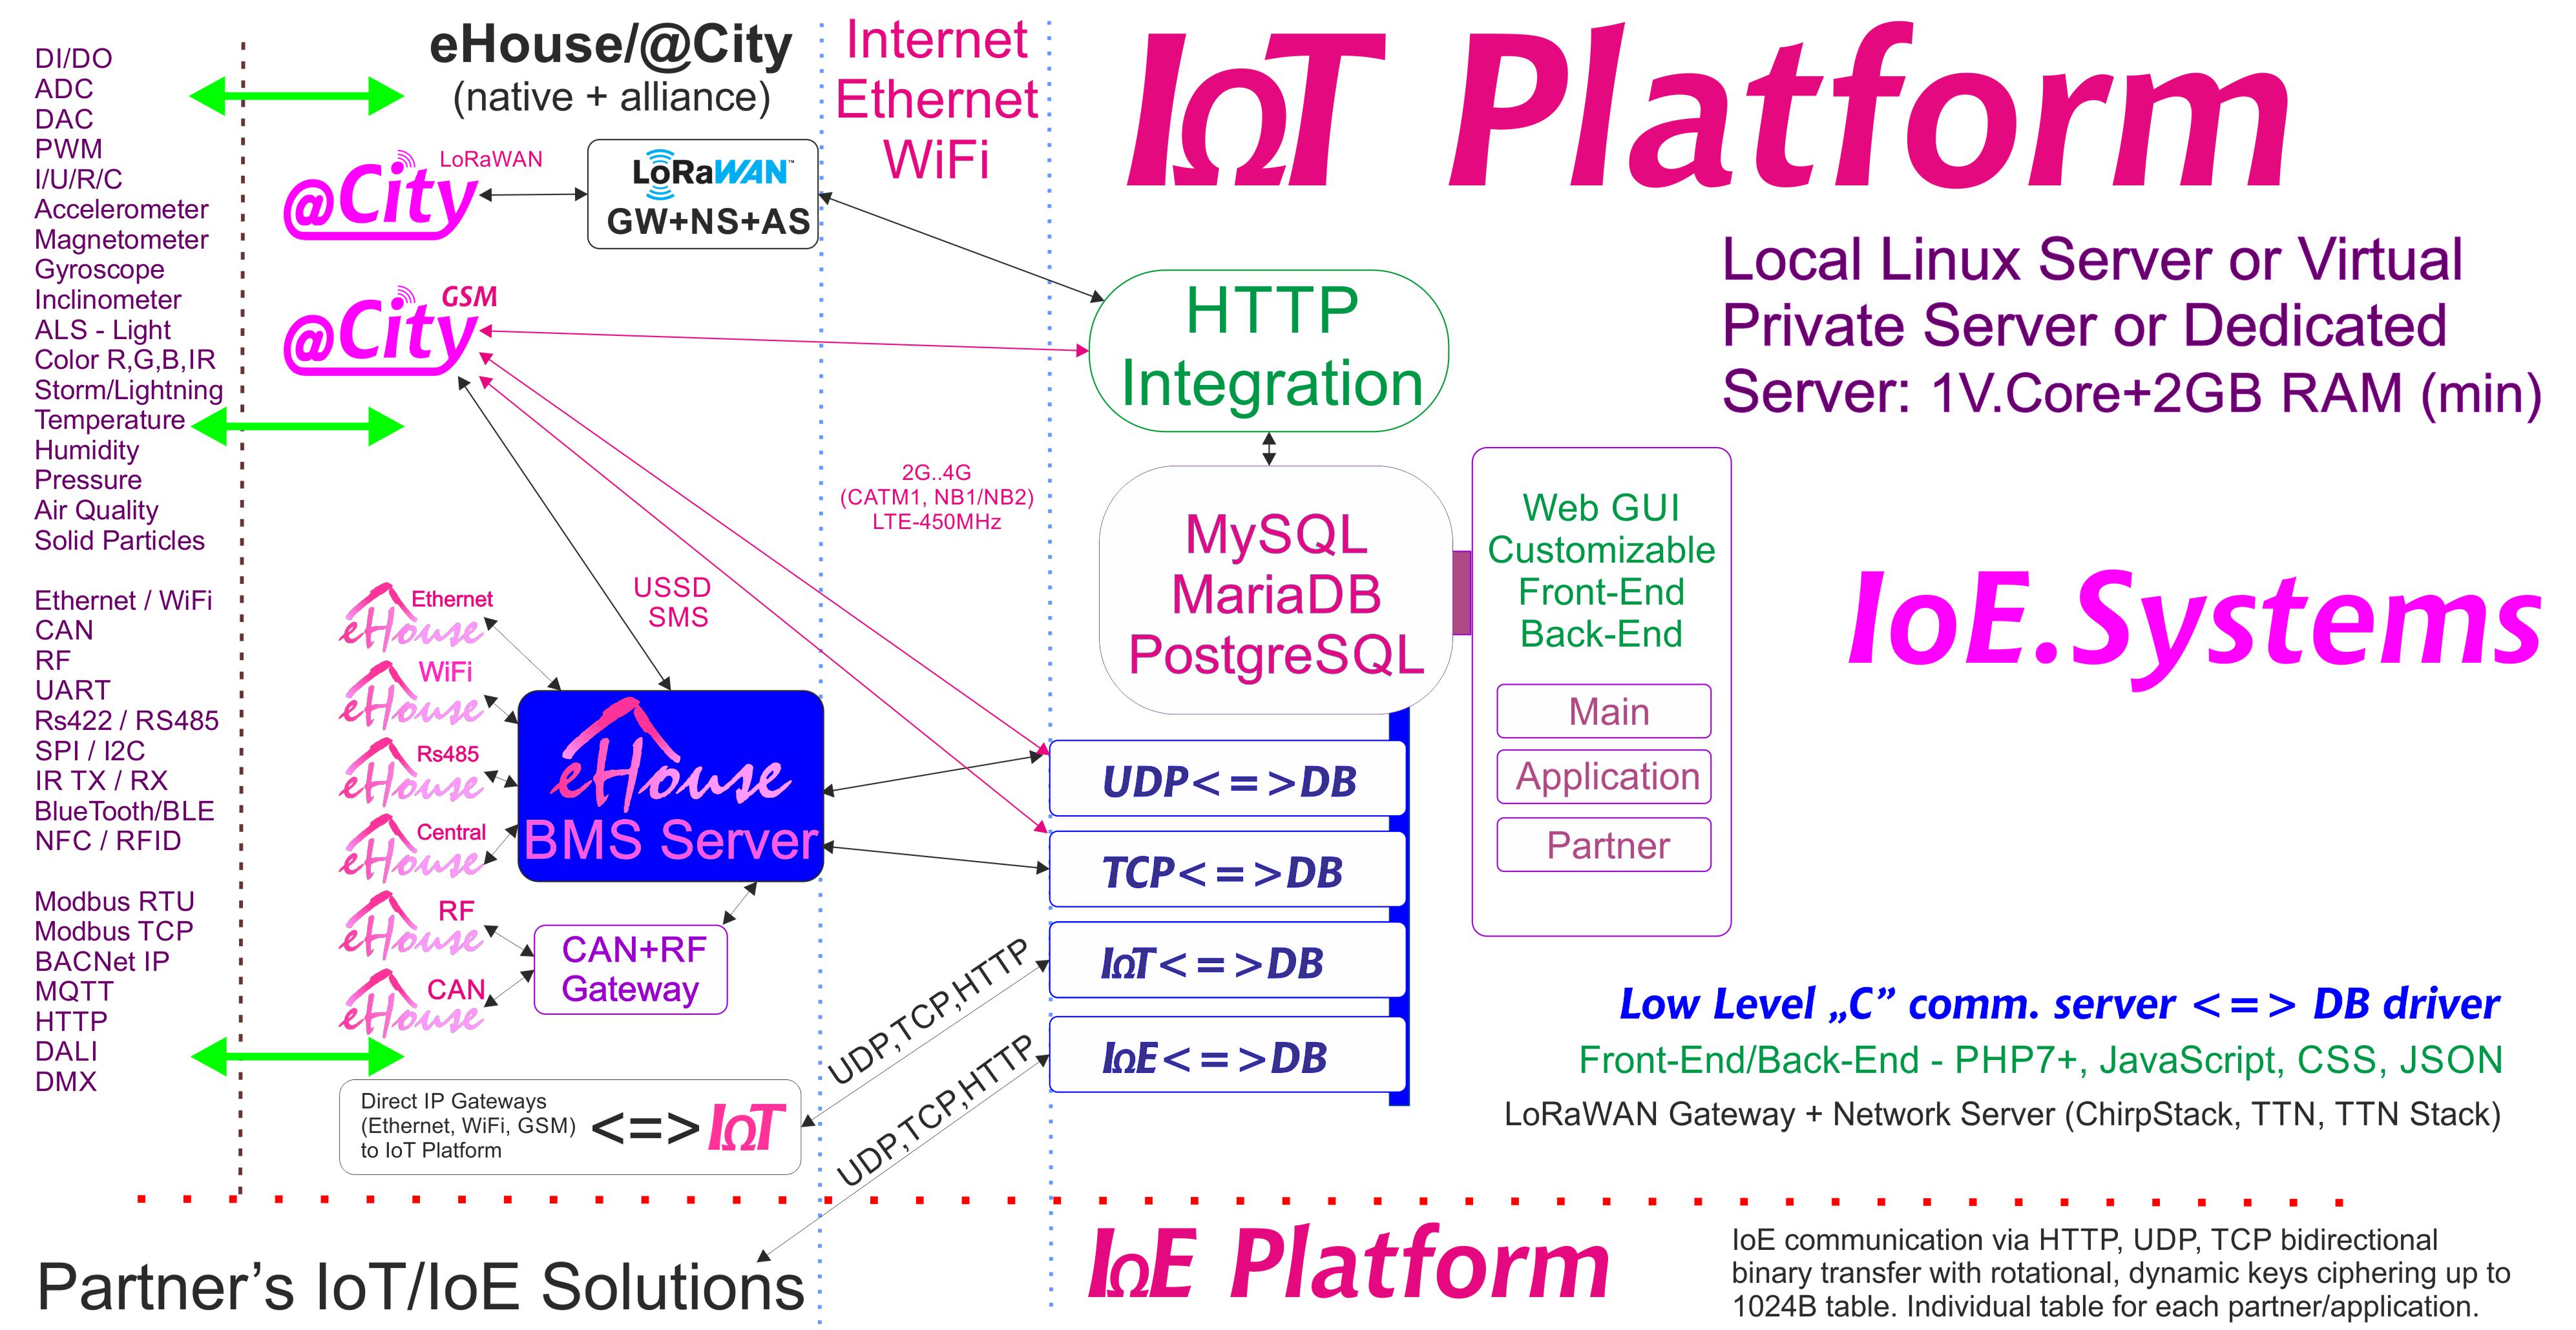 eHouse, eCity Server Software BAS, BMS, IoE, IoT Systems ndi Platform